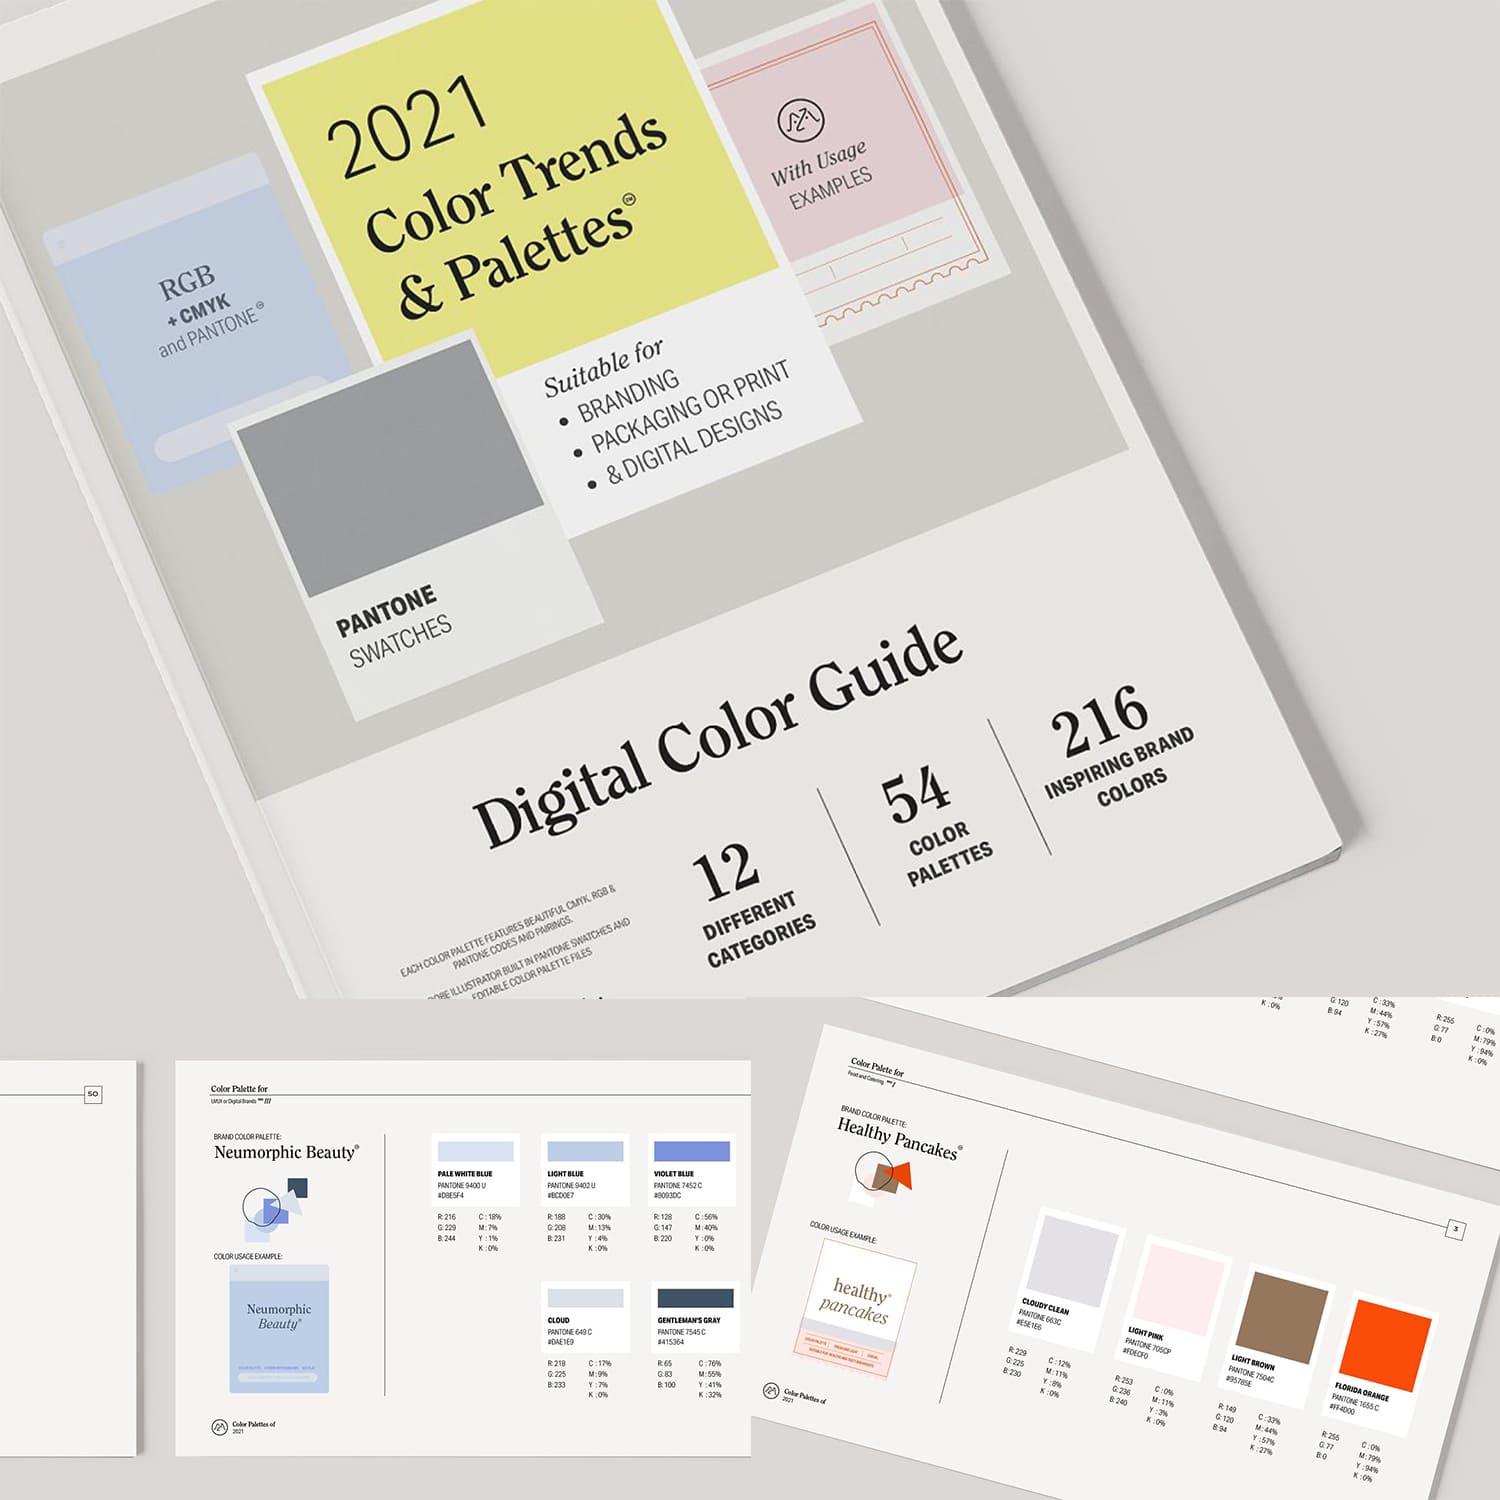 2021 Color Palettes And Color Trends - Digital Color Guide.